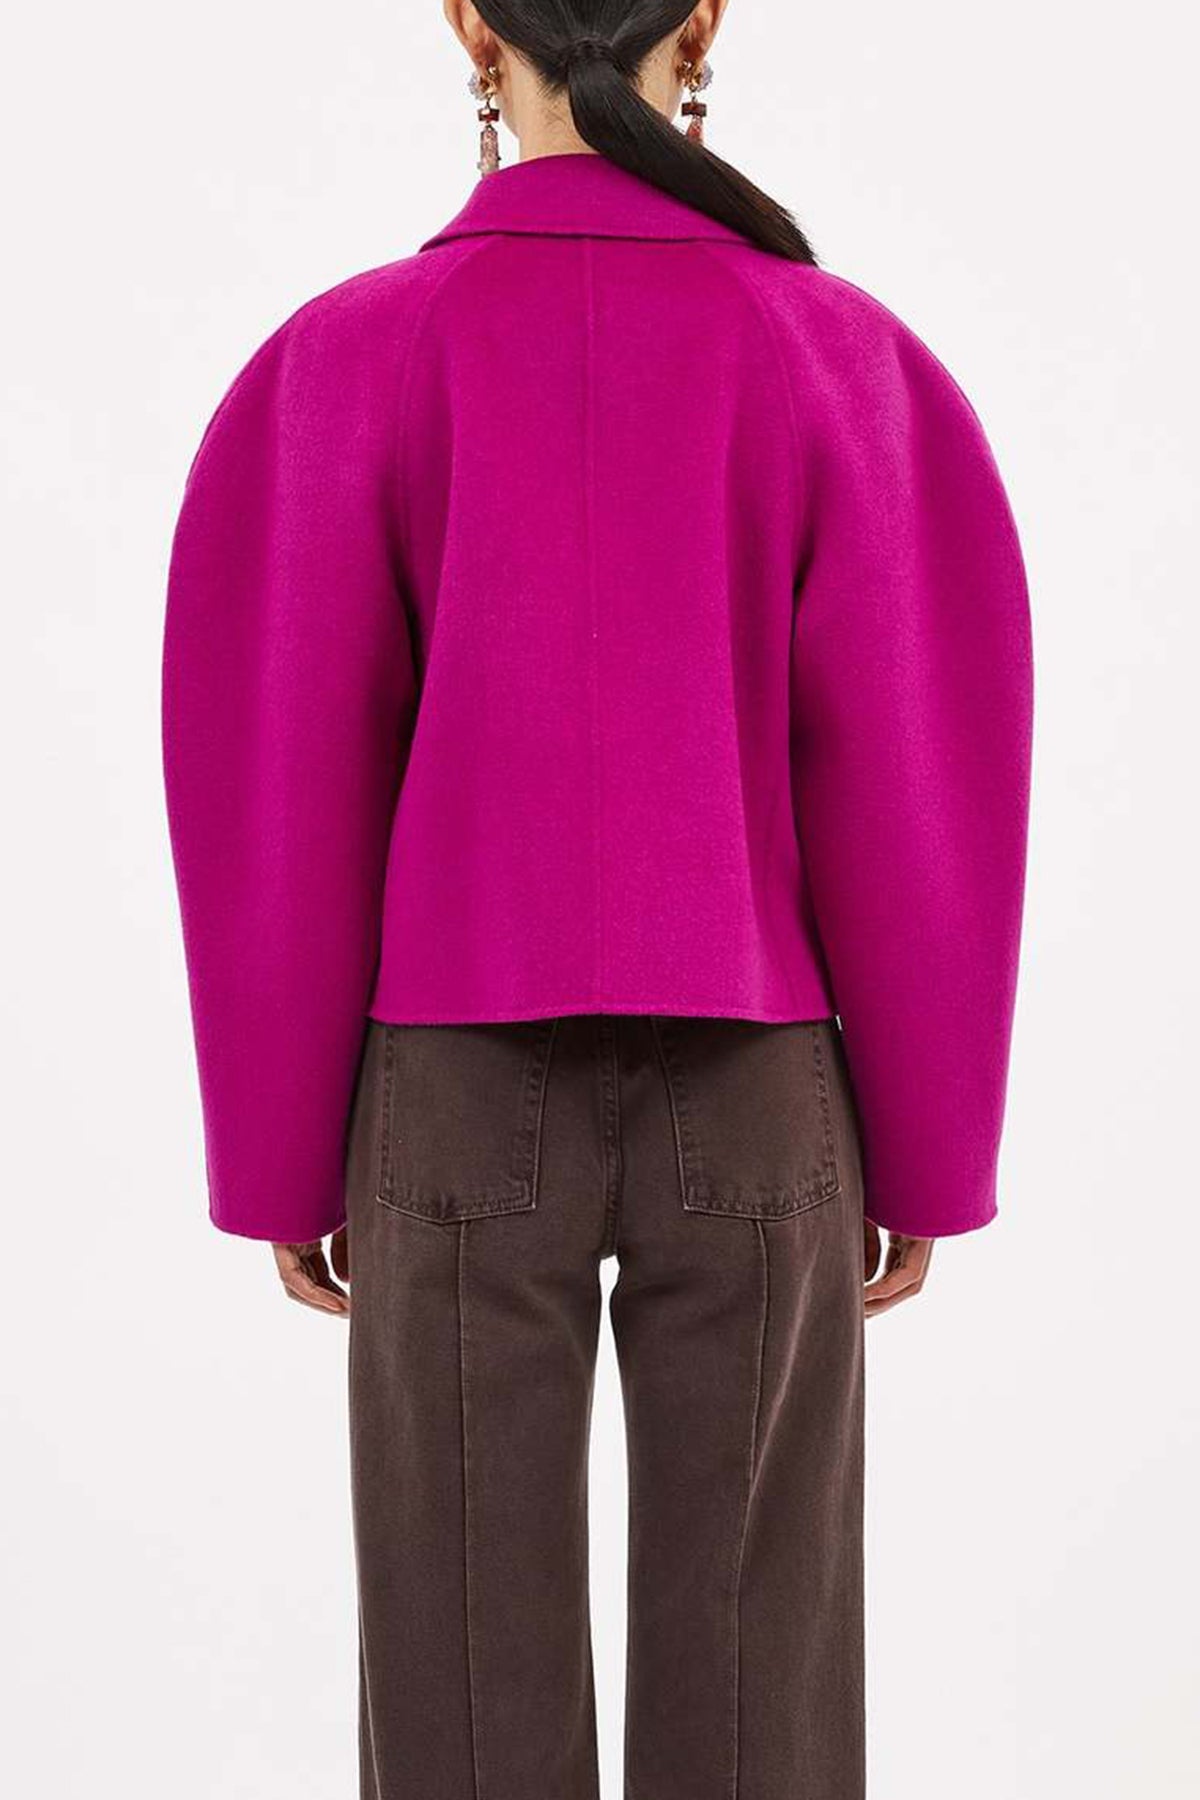 Coralie Wool-Blend Cropped Jacket in Thistle - shop-olivia.com